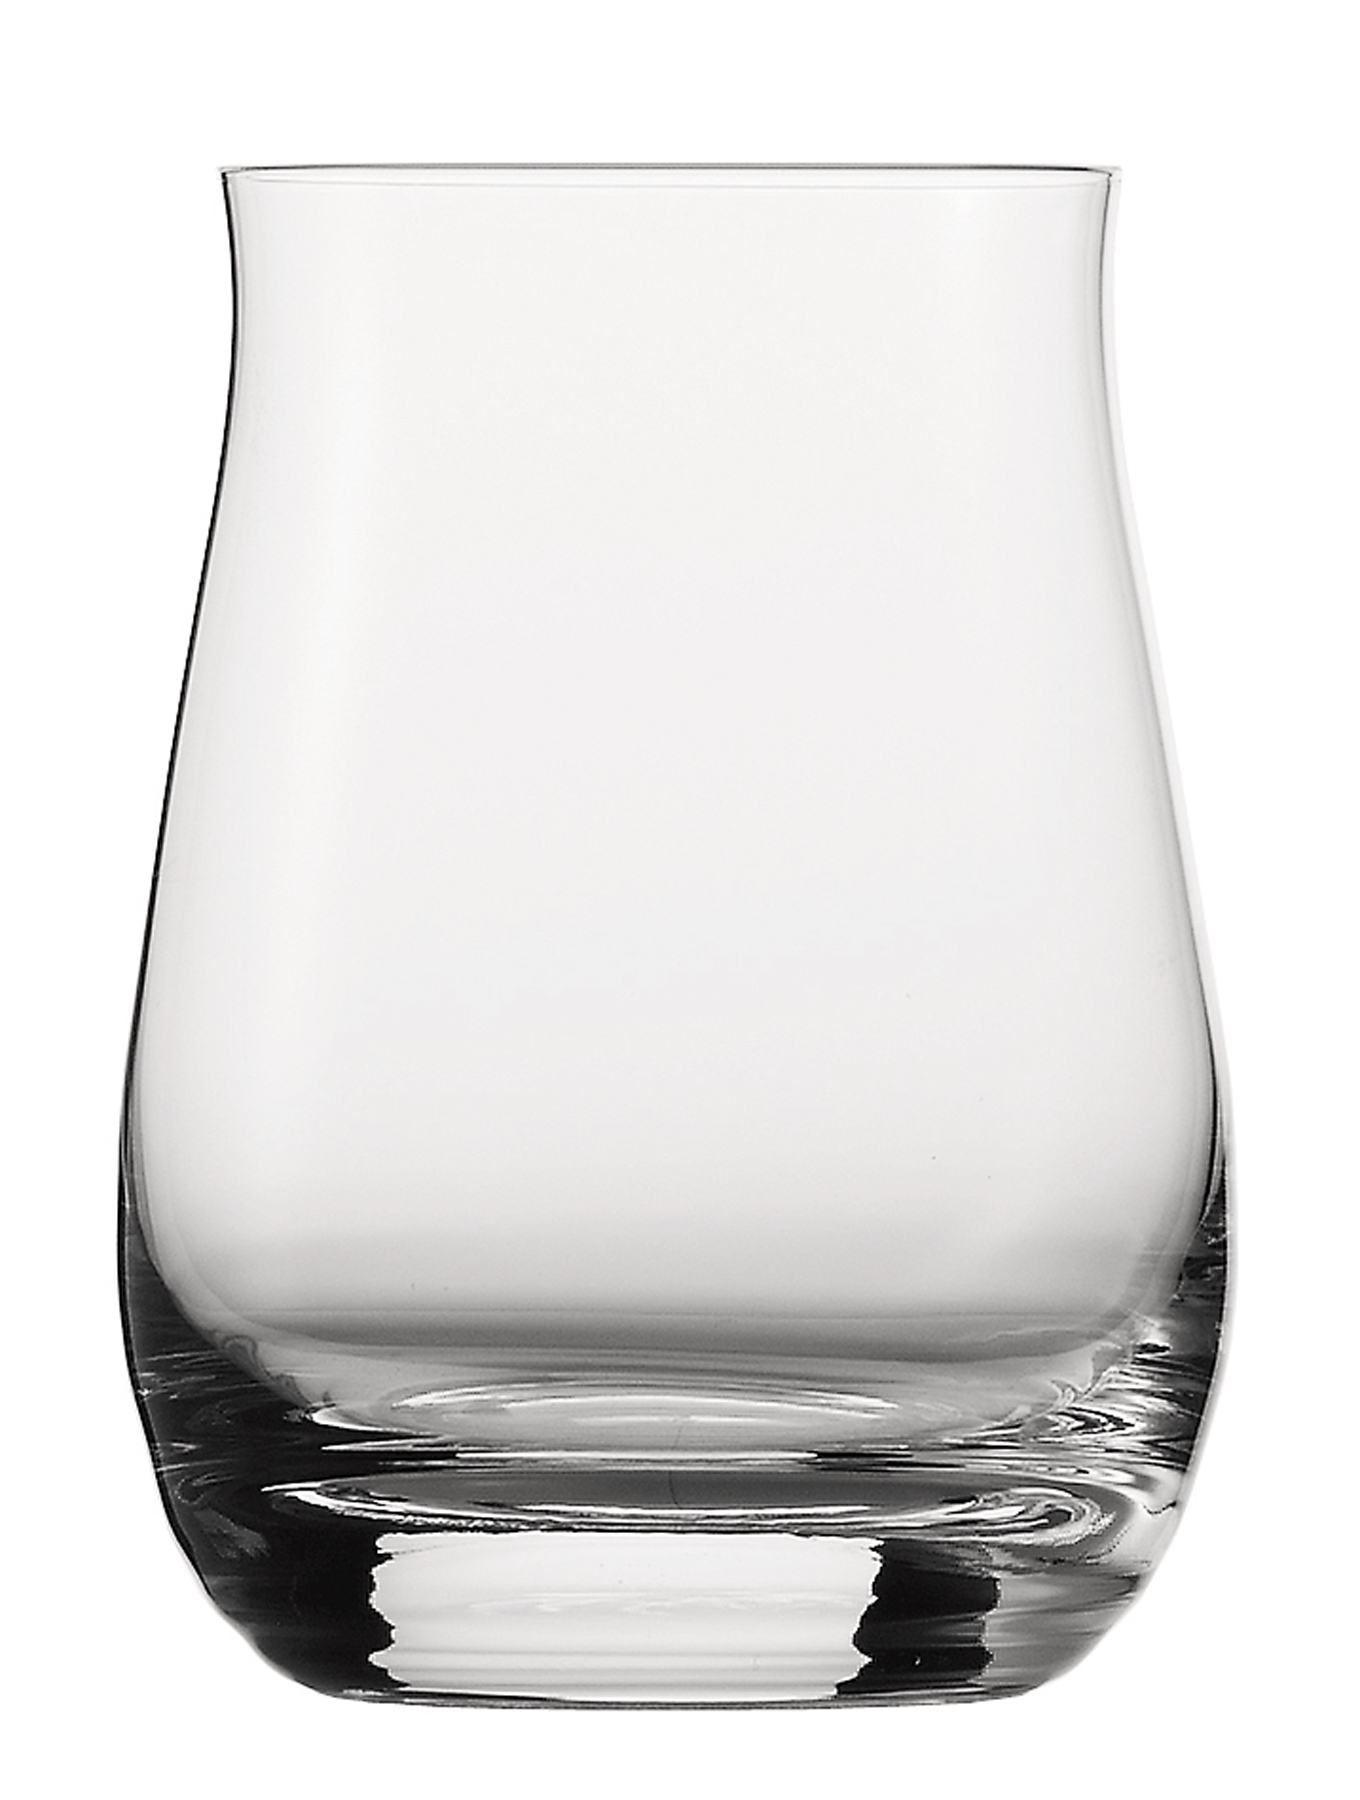 Bourbon glass, Special Glasses, Spiegelau - 340ml